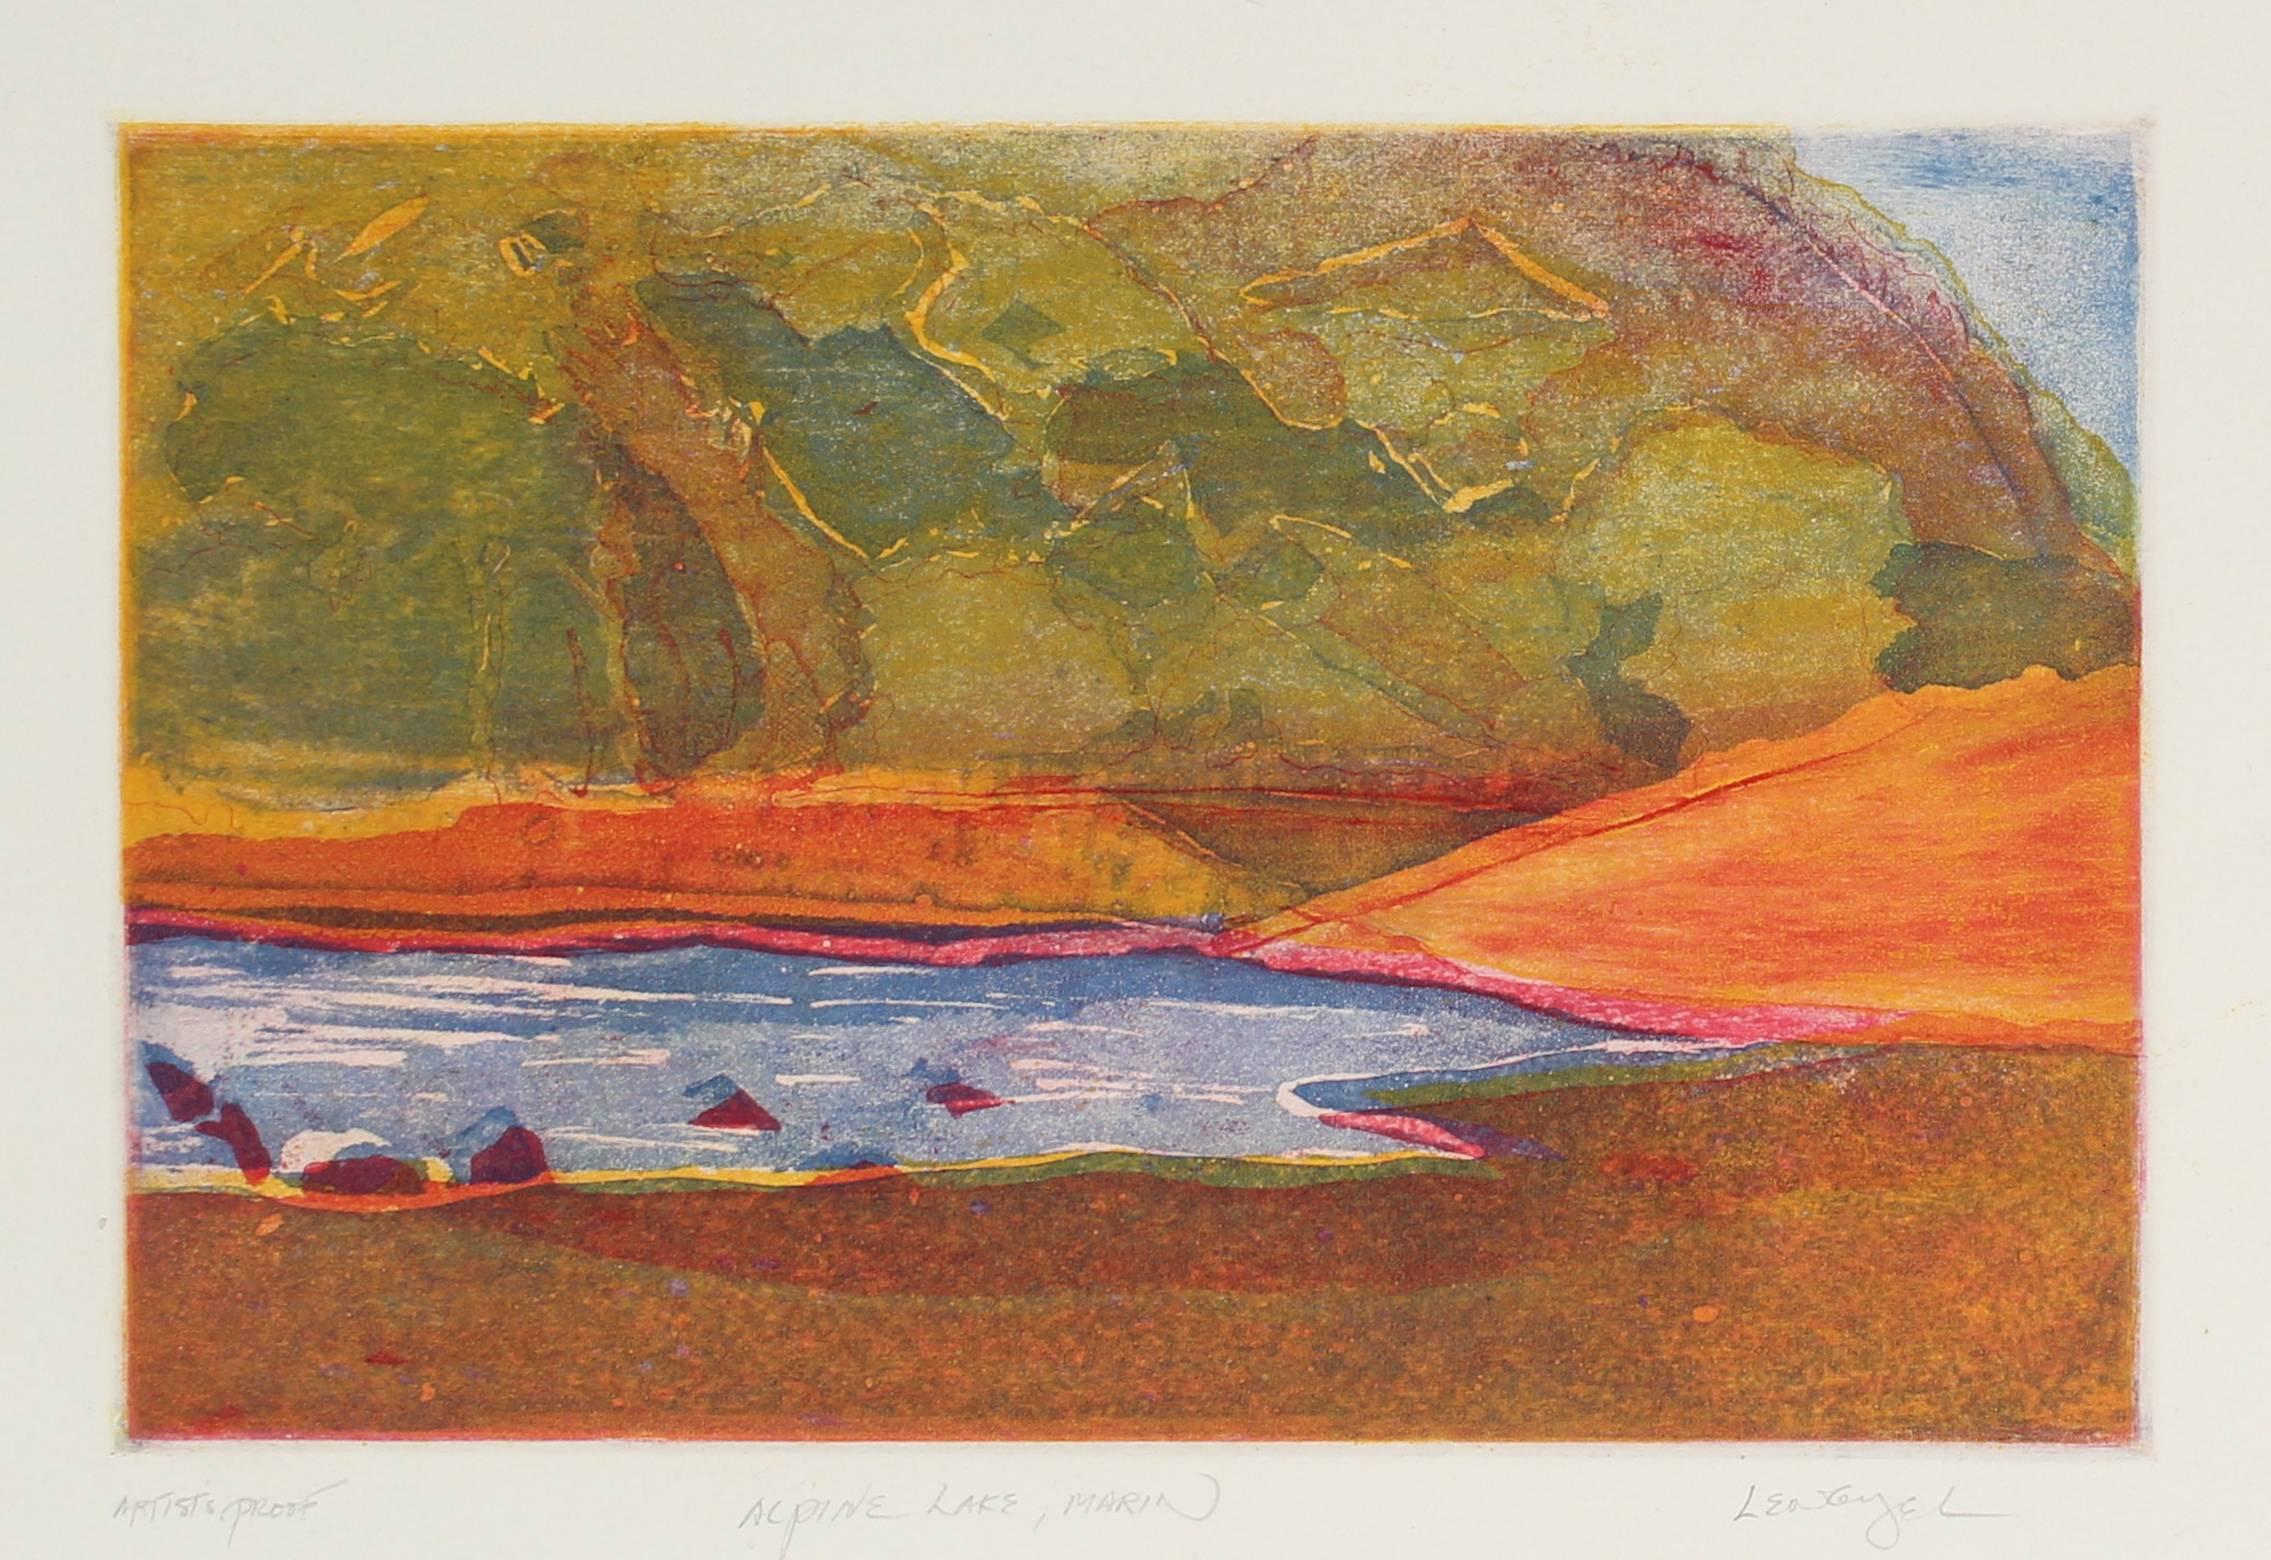 Laura Lengyel Landscape Print - "Alpine Lake, Marin" Bay Area Landscape Etching, 1981